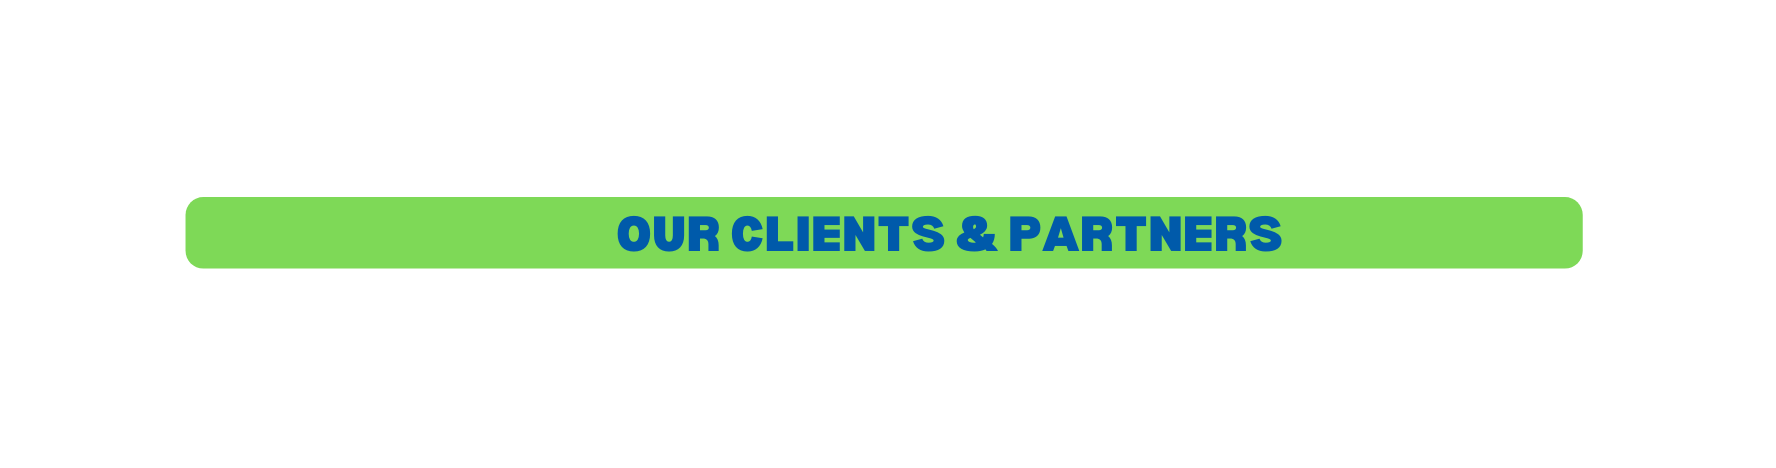 our ClientS Partners